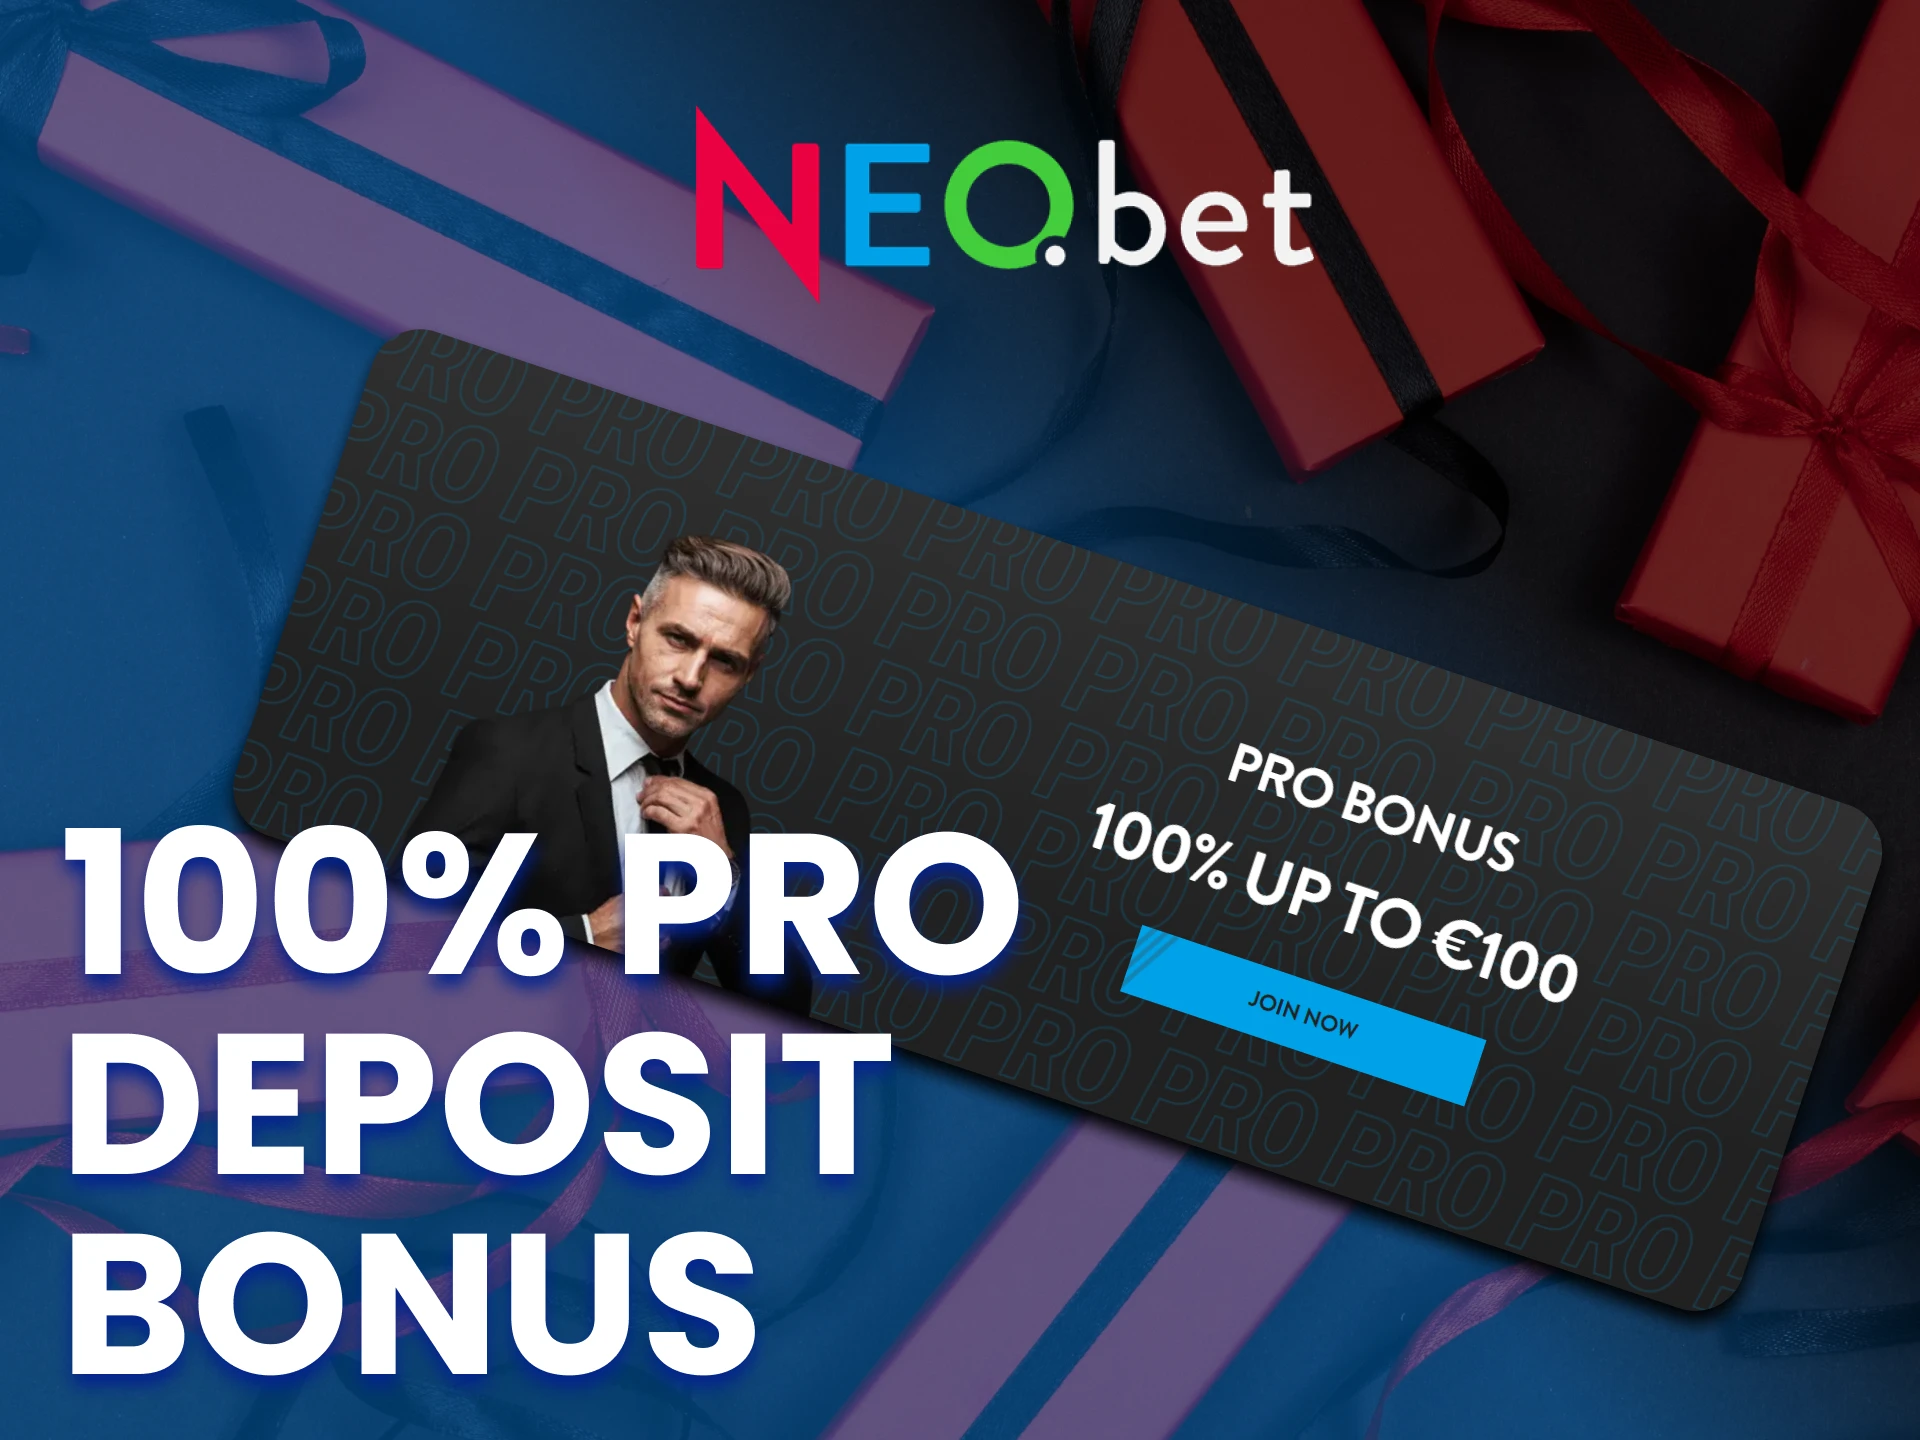 Get a special PRO deposit bonus on NEO.bet.